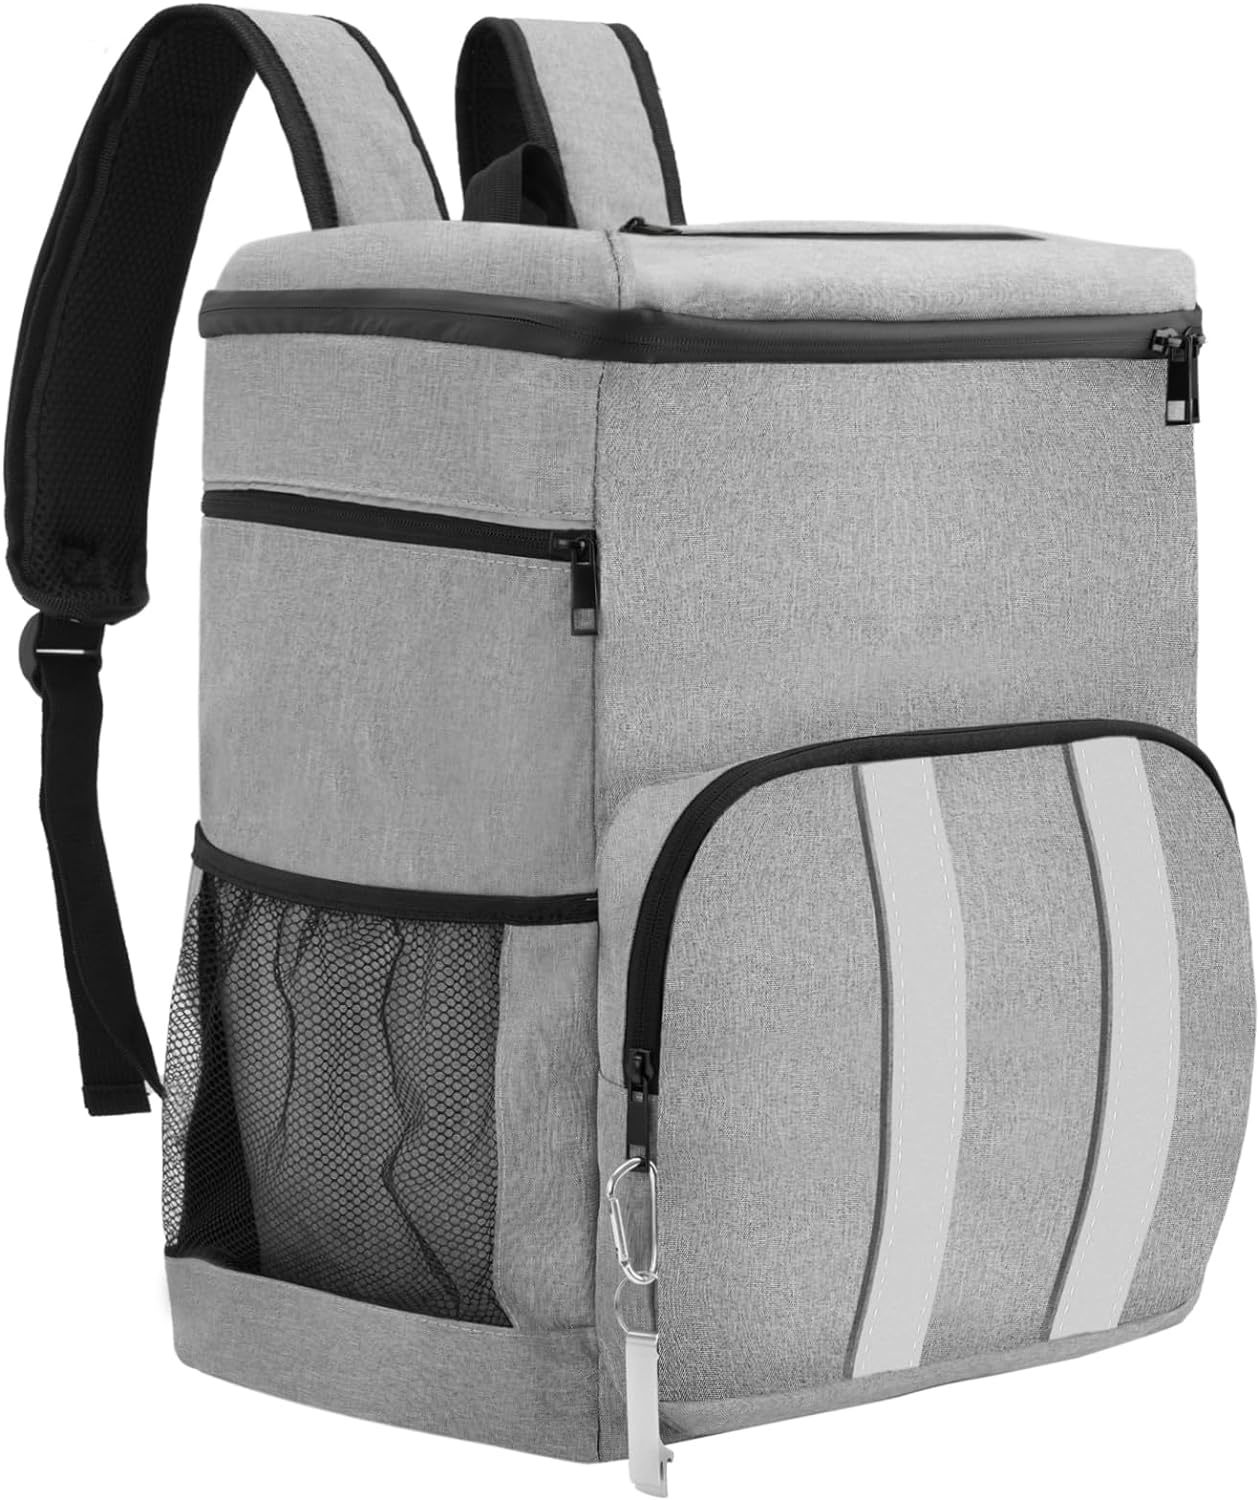 Waterproof Durable Portable Lunch Bag Outdoor Waterproof Insulated Cooler Bag